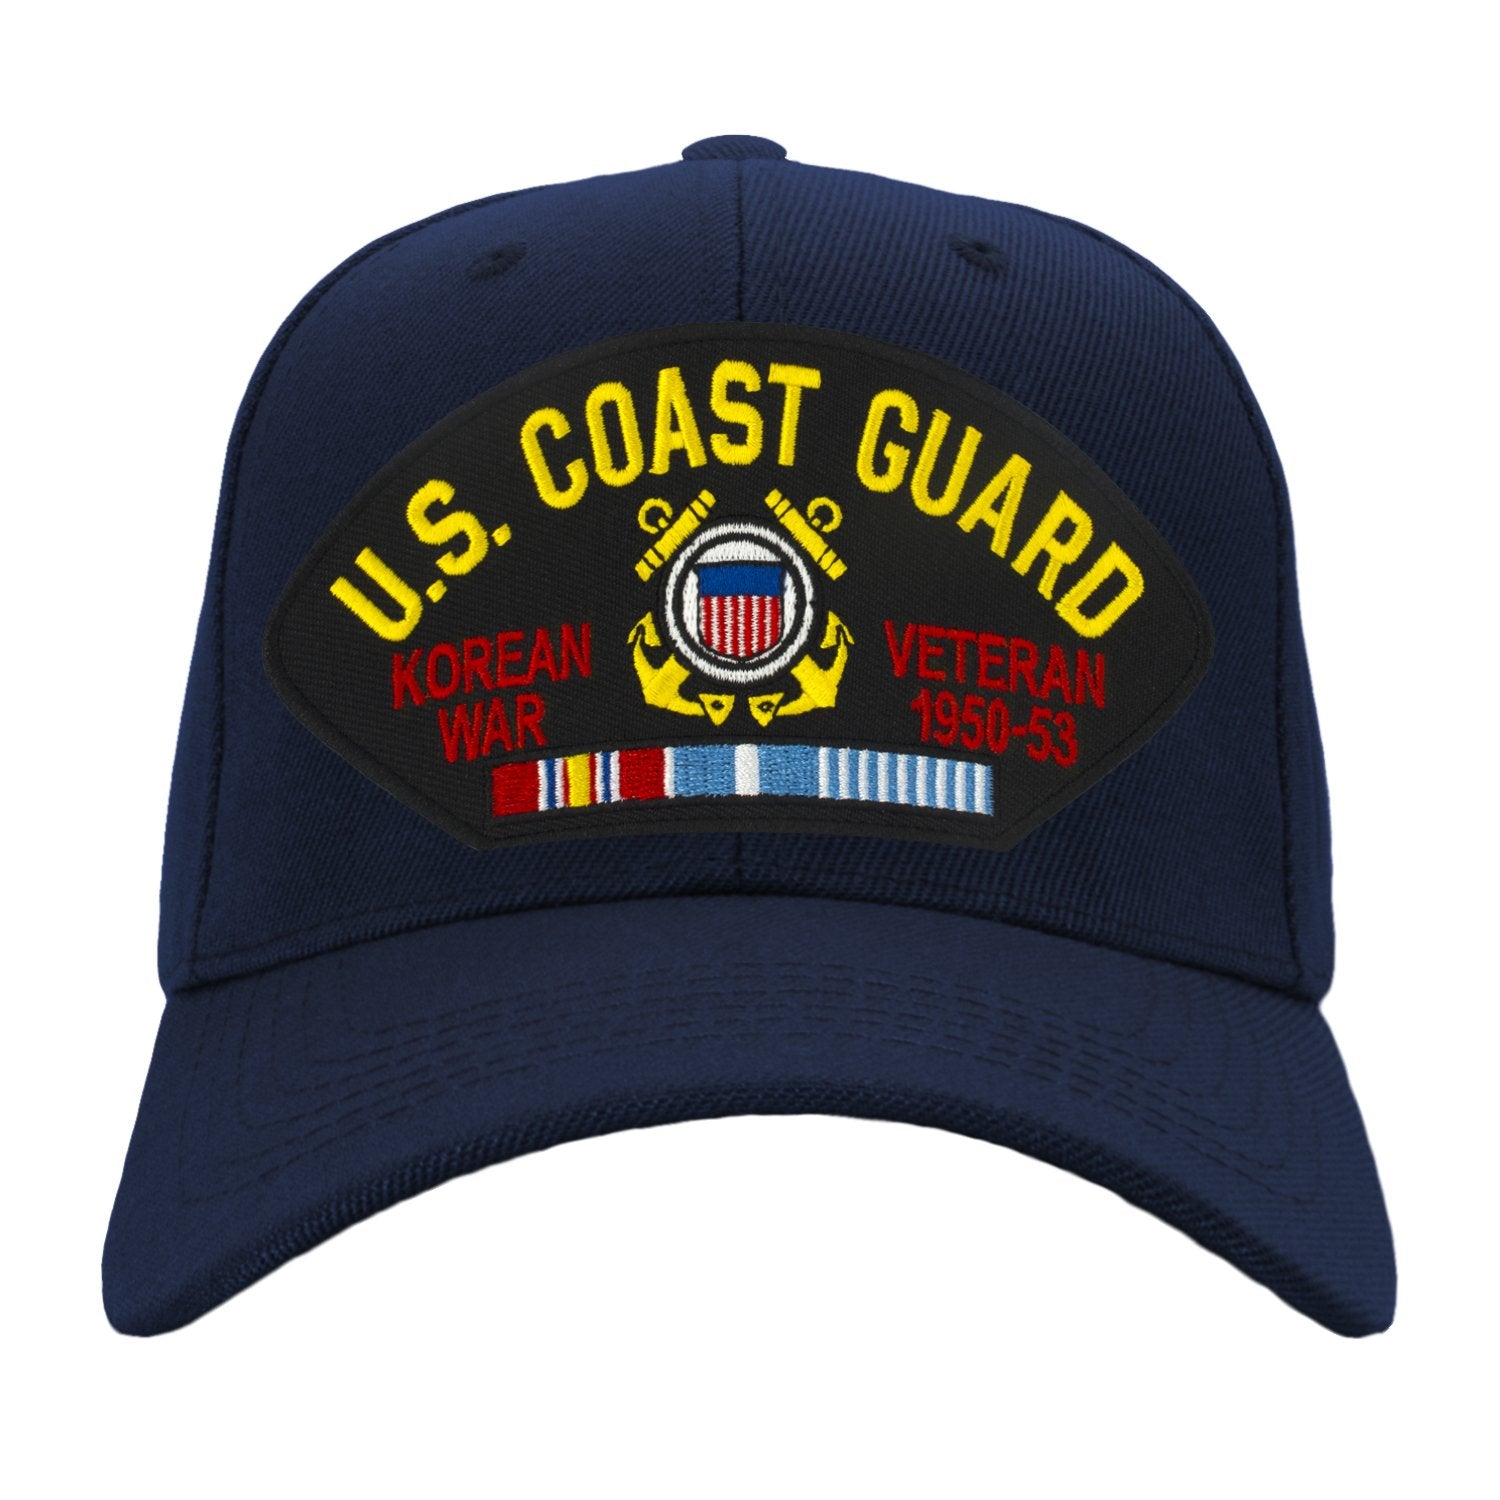 US Coast Guard - Korean War Veteran Hat - Multiple Colors Available